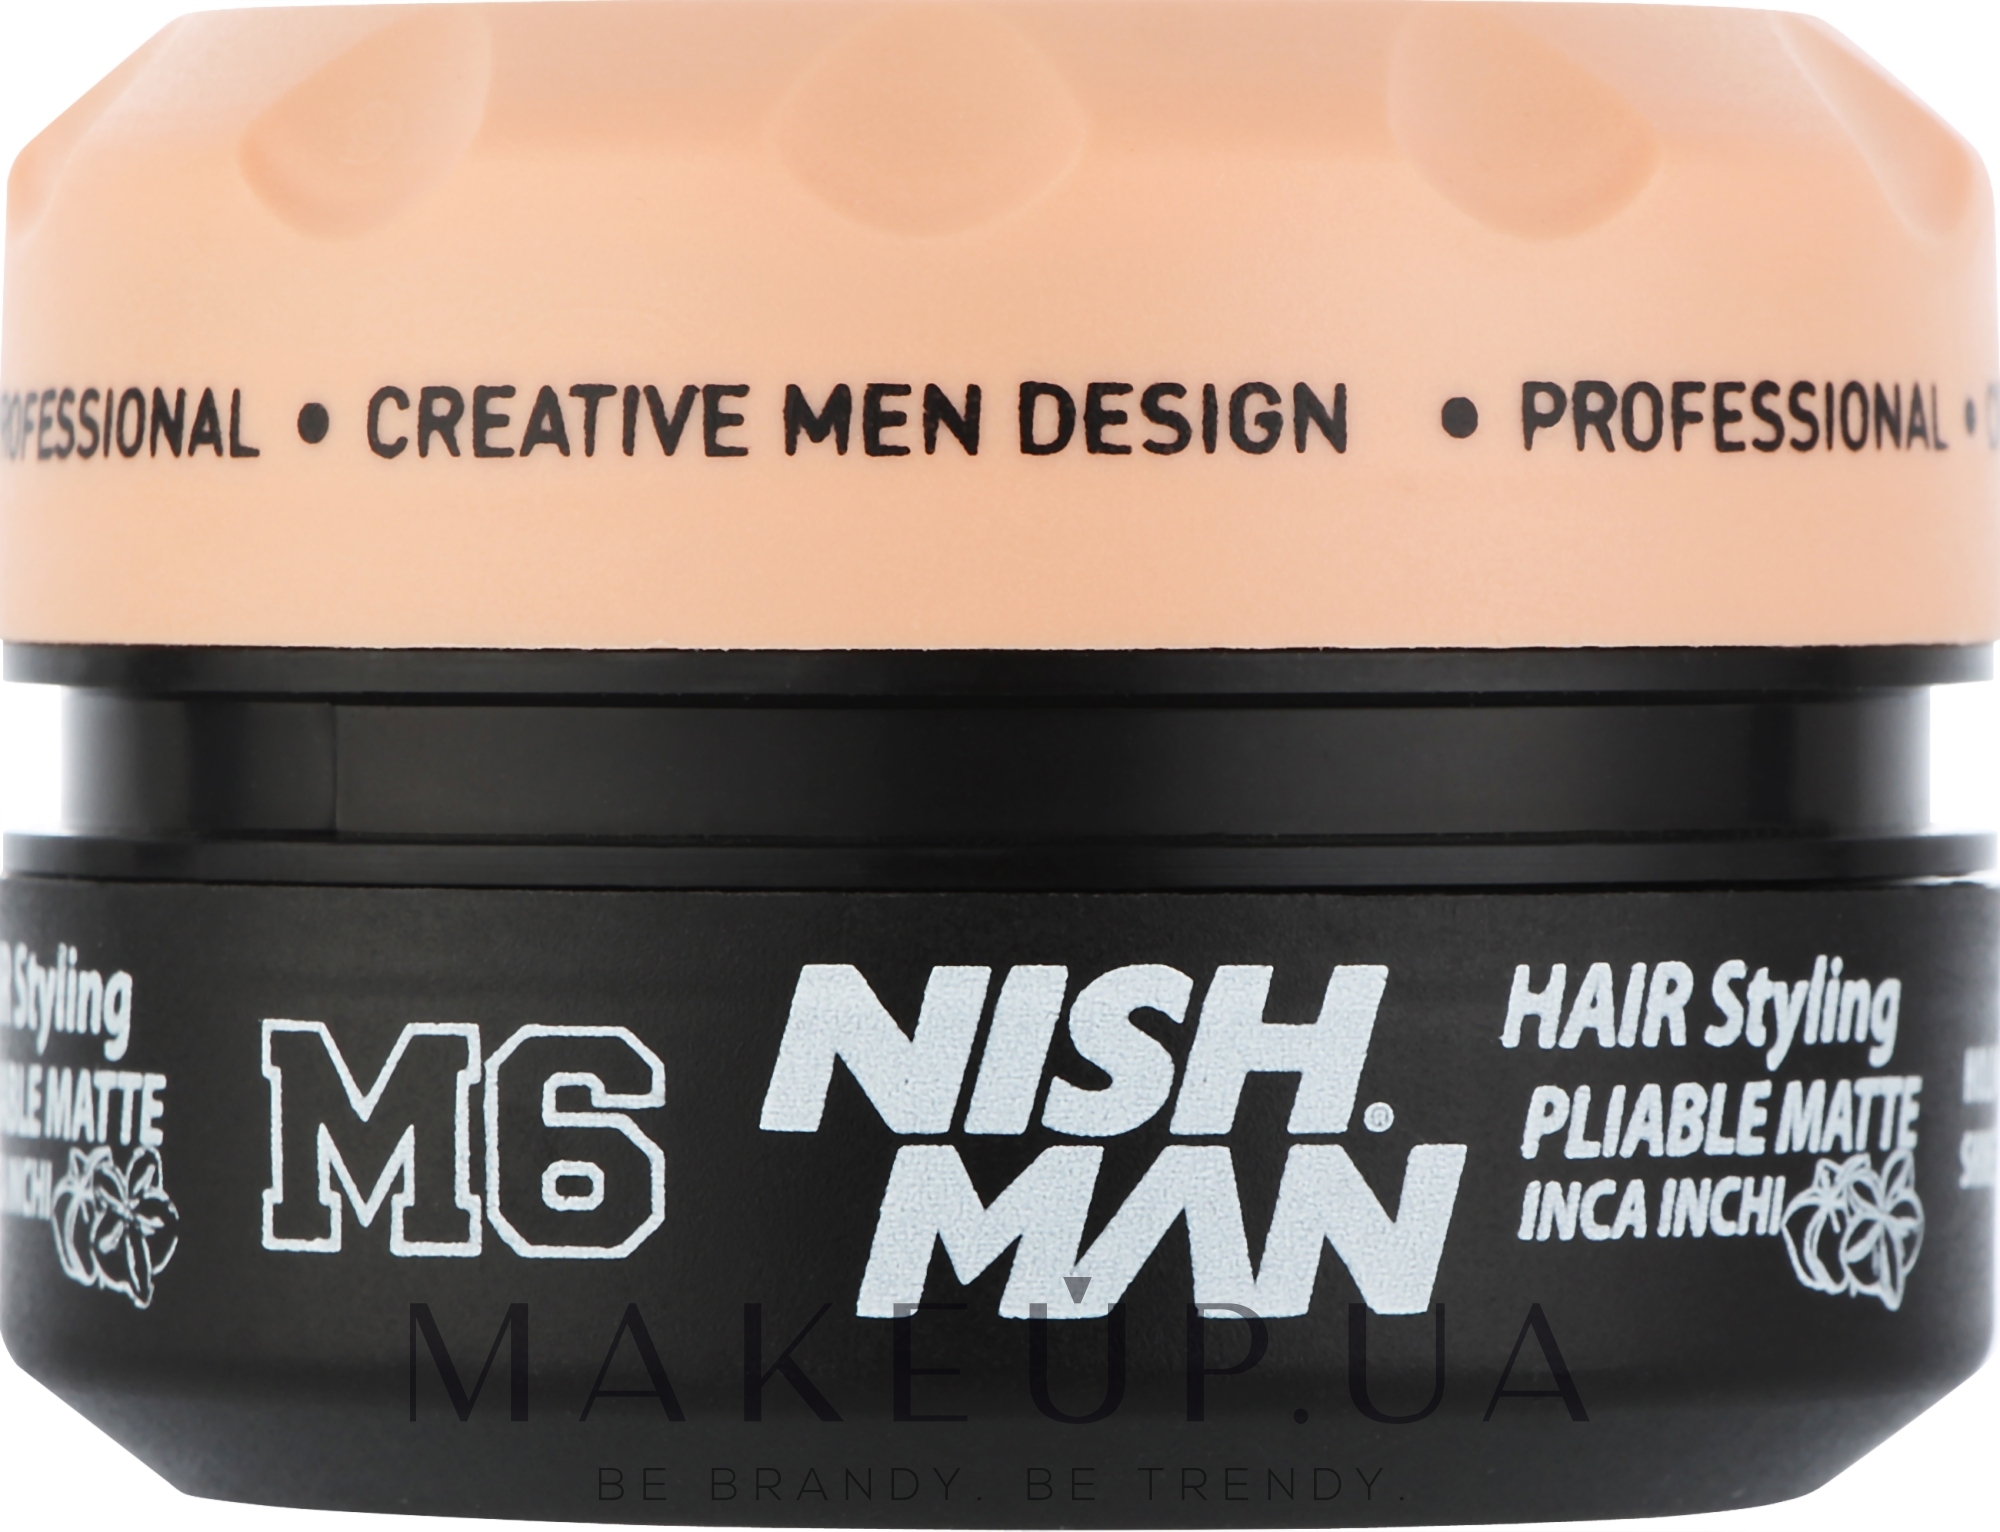 Матовый воск для укладки волос - Nishman Hair Styling Pliable Matte Inca Inchi M6 — фото 100ml